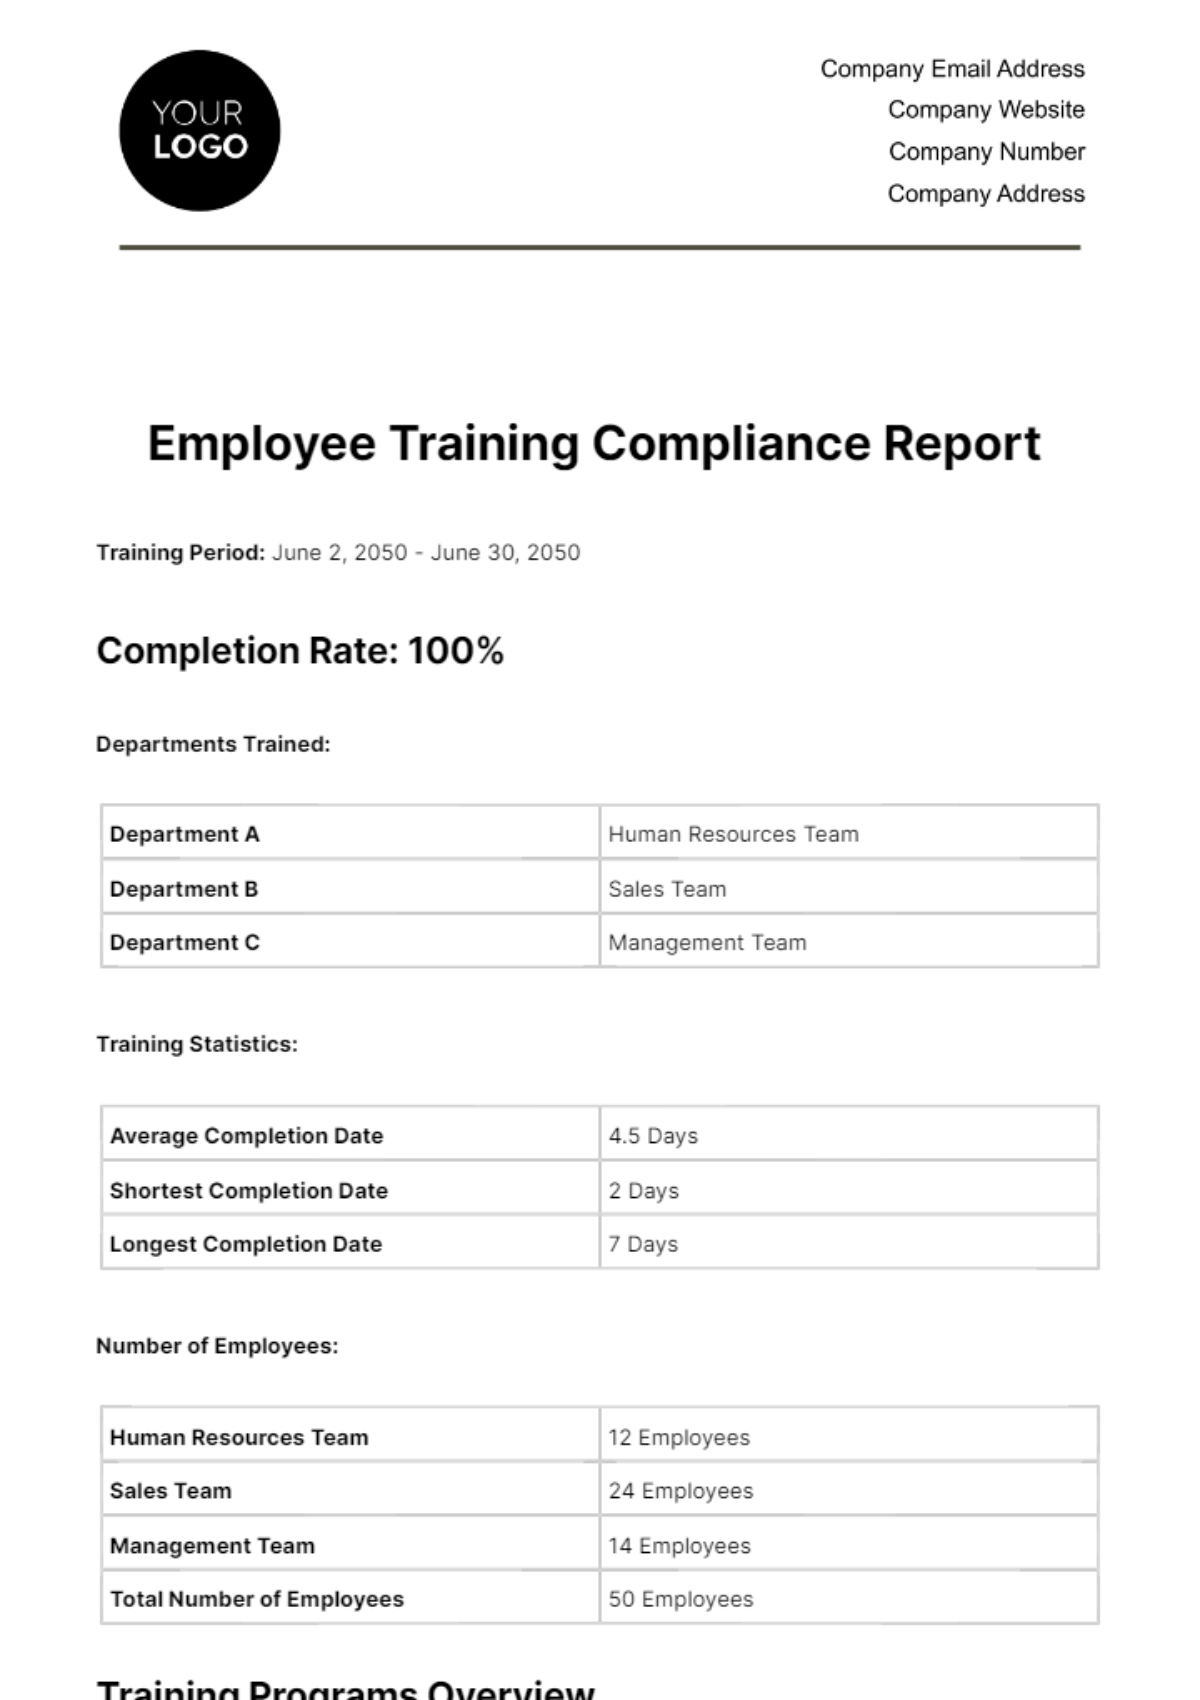 Employee Training Compliance Report HR Template